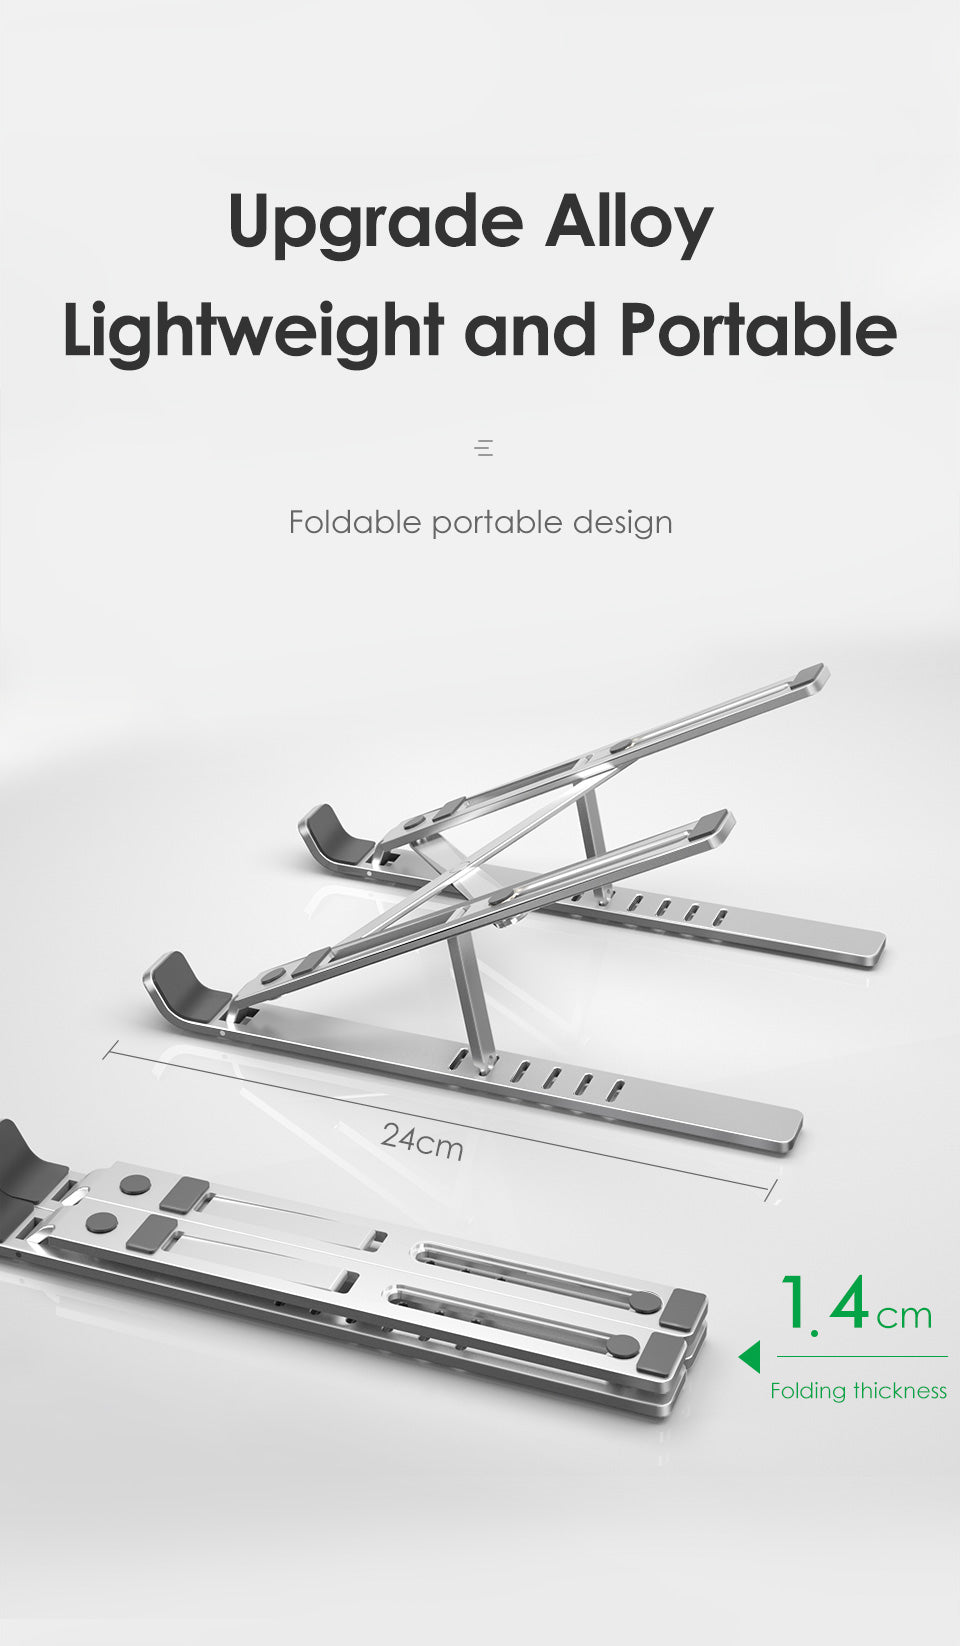 Lightweight Ergonomic Aluminum Height Adjuster Stand For MacBook Pro Desktop Table Mount Lightweight Portable Universal Design Suitable For Most Laptops